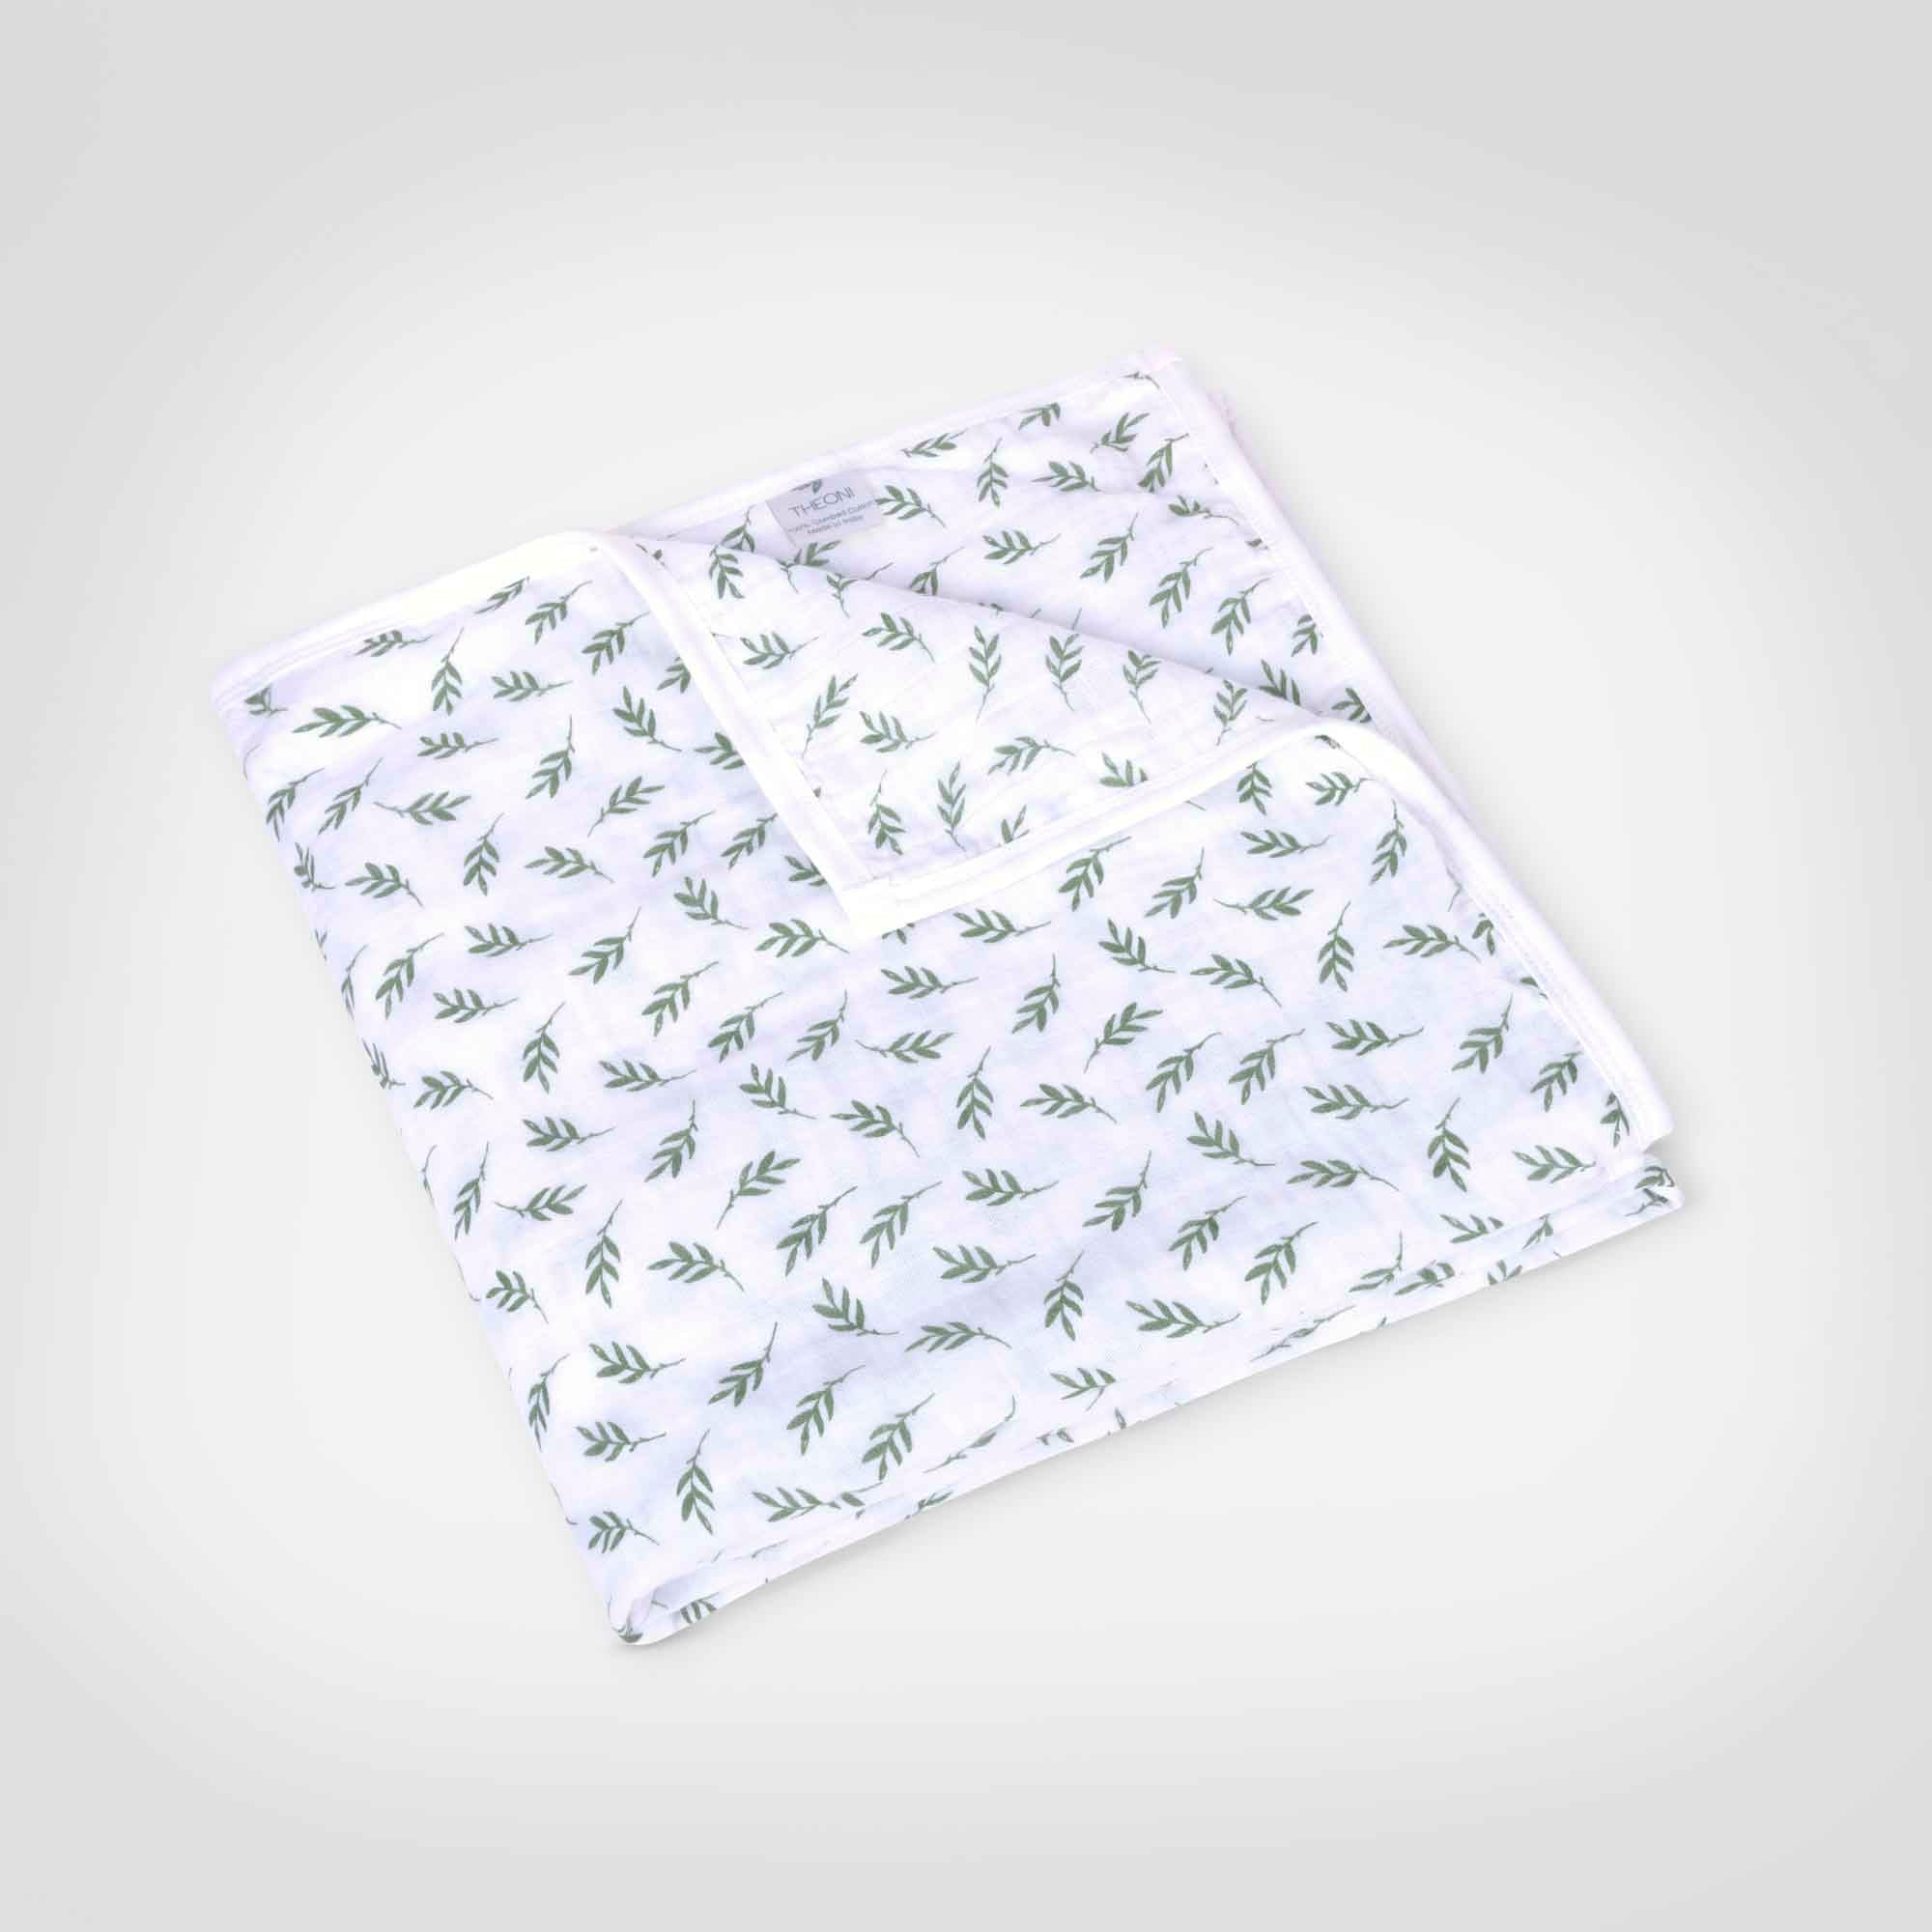 Theoni 100%  Organic Cotton Snuggle Blanket-Hedge Green Leaf